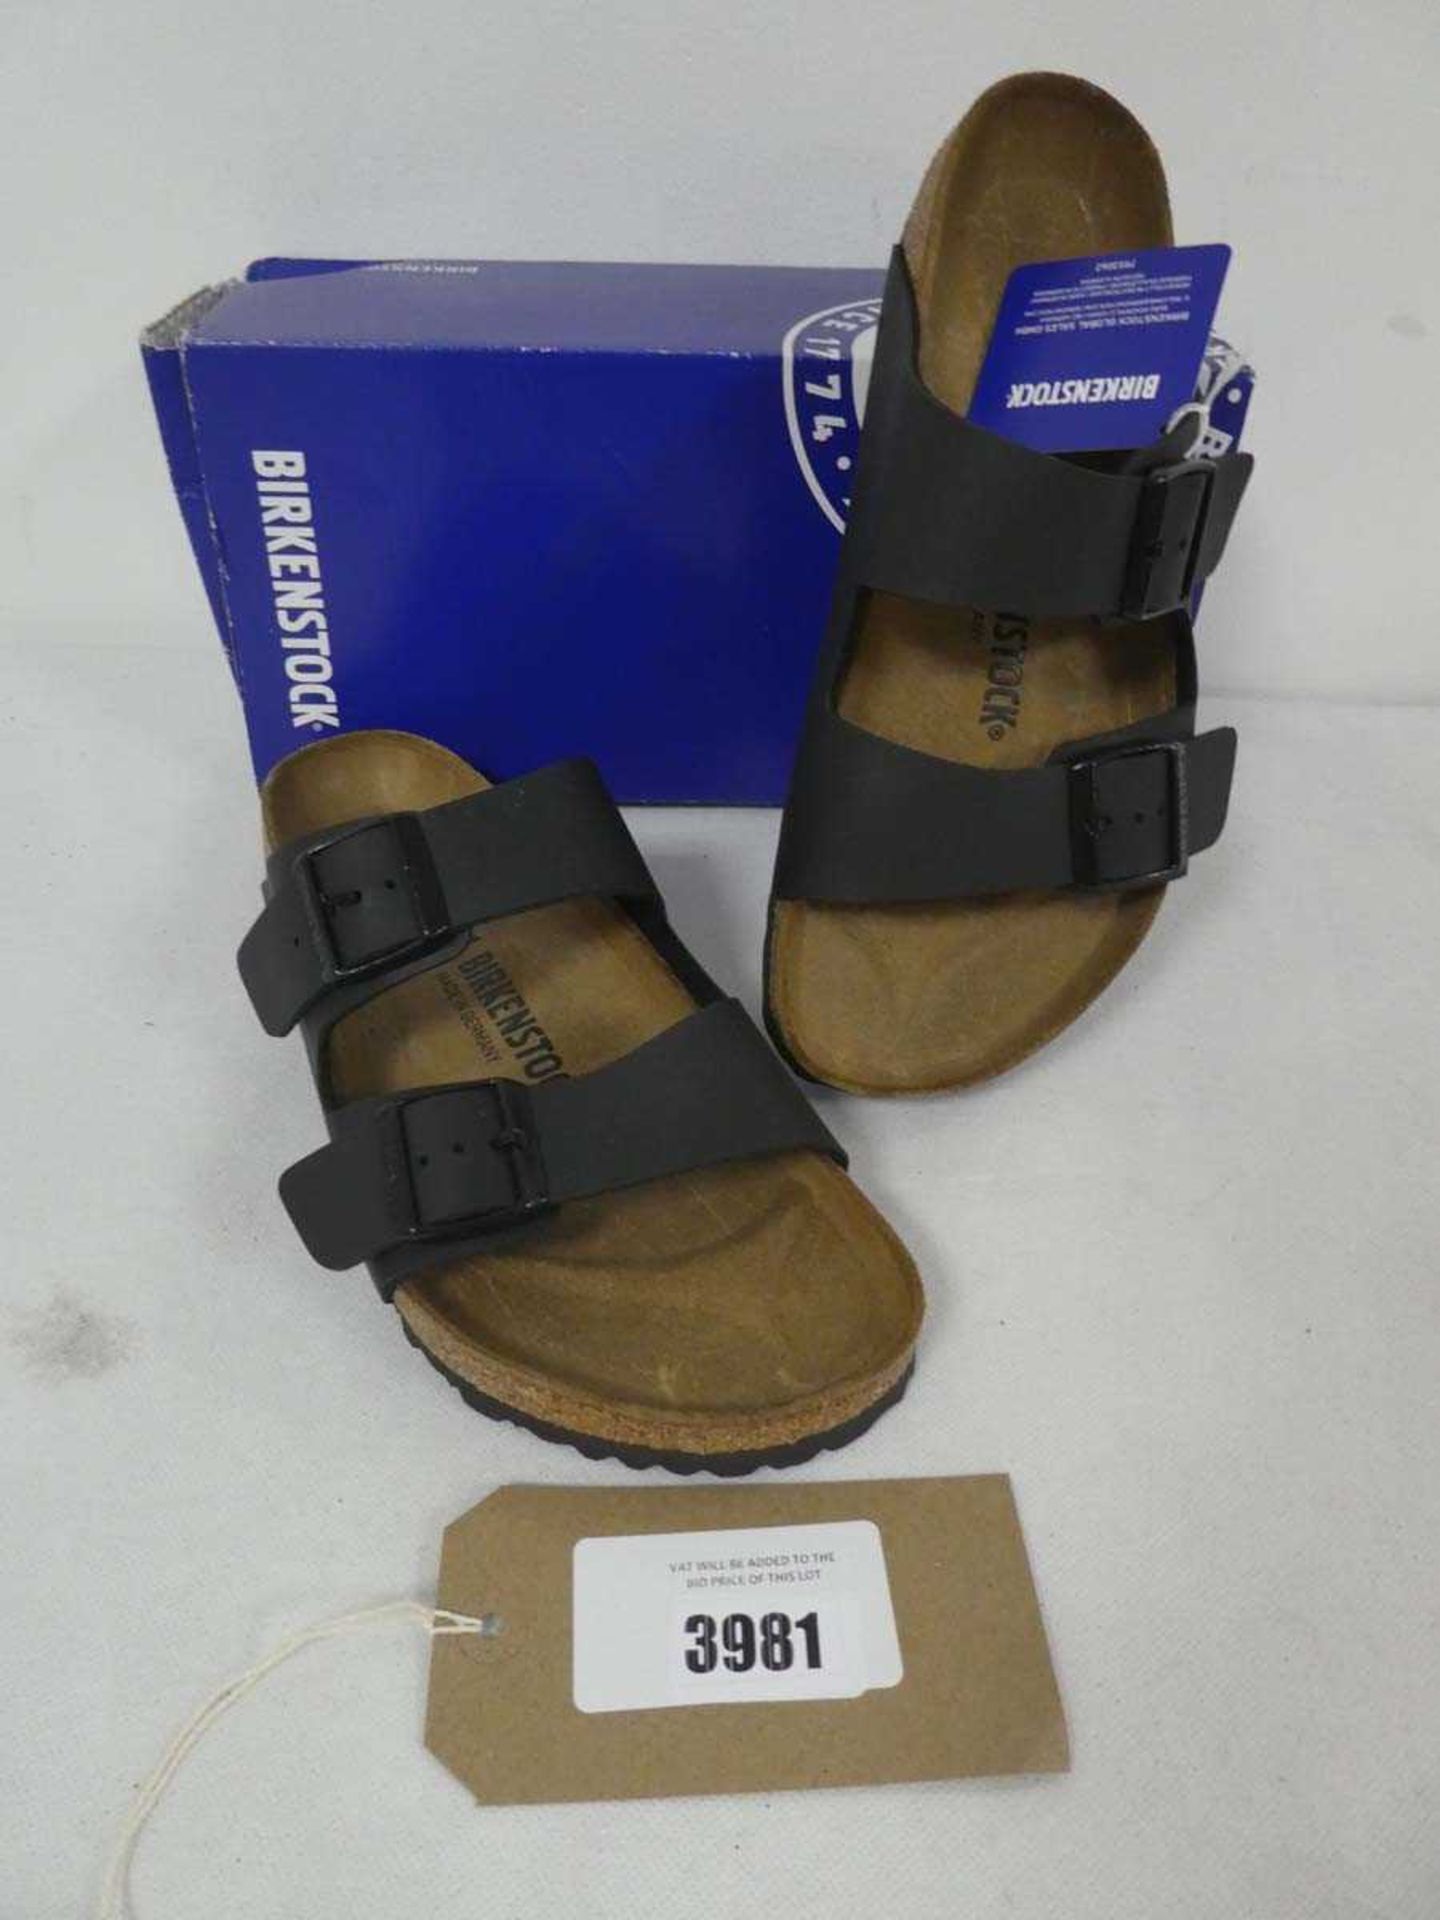 +VAT Boxed pair of Birkenstock Arizona leather sandals, size 6